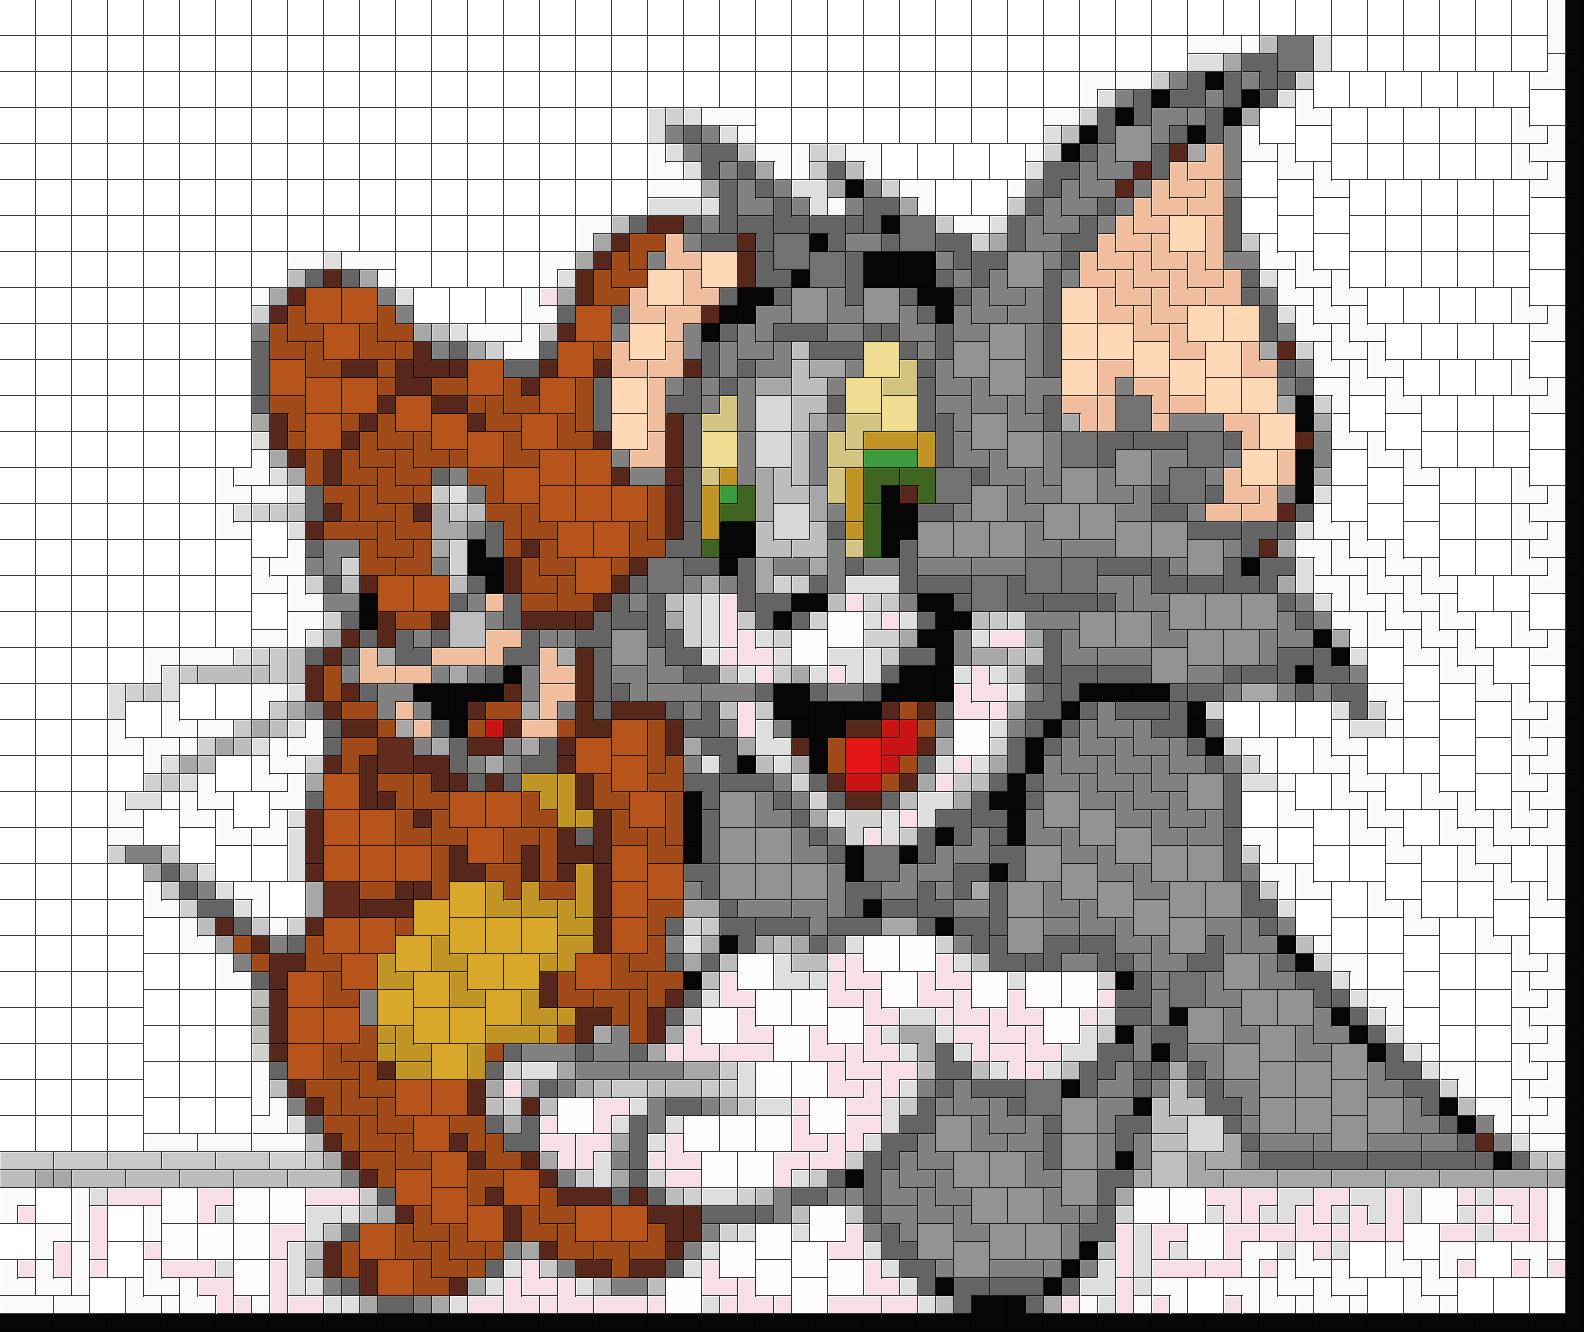 Tom and Jerry
De grappige muis en kat